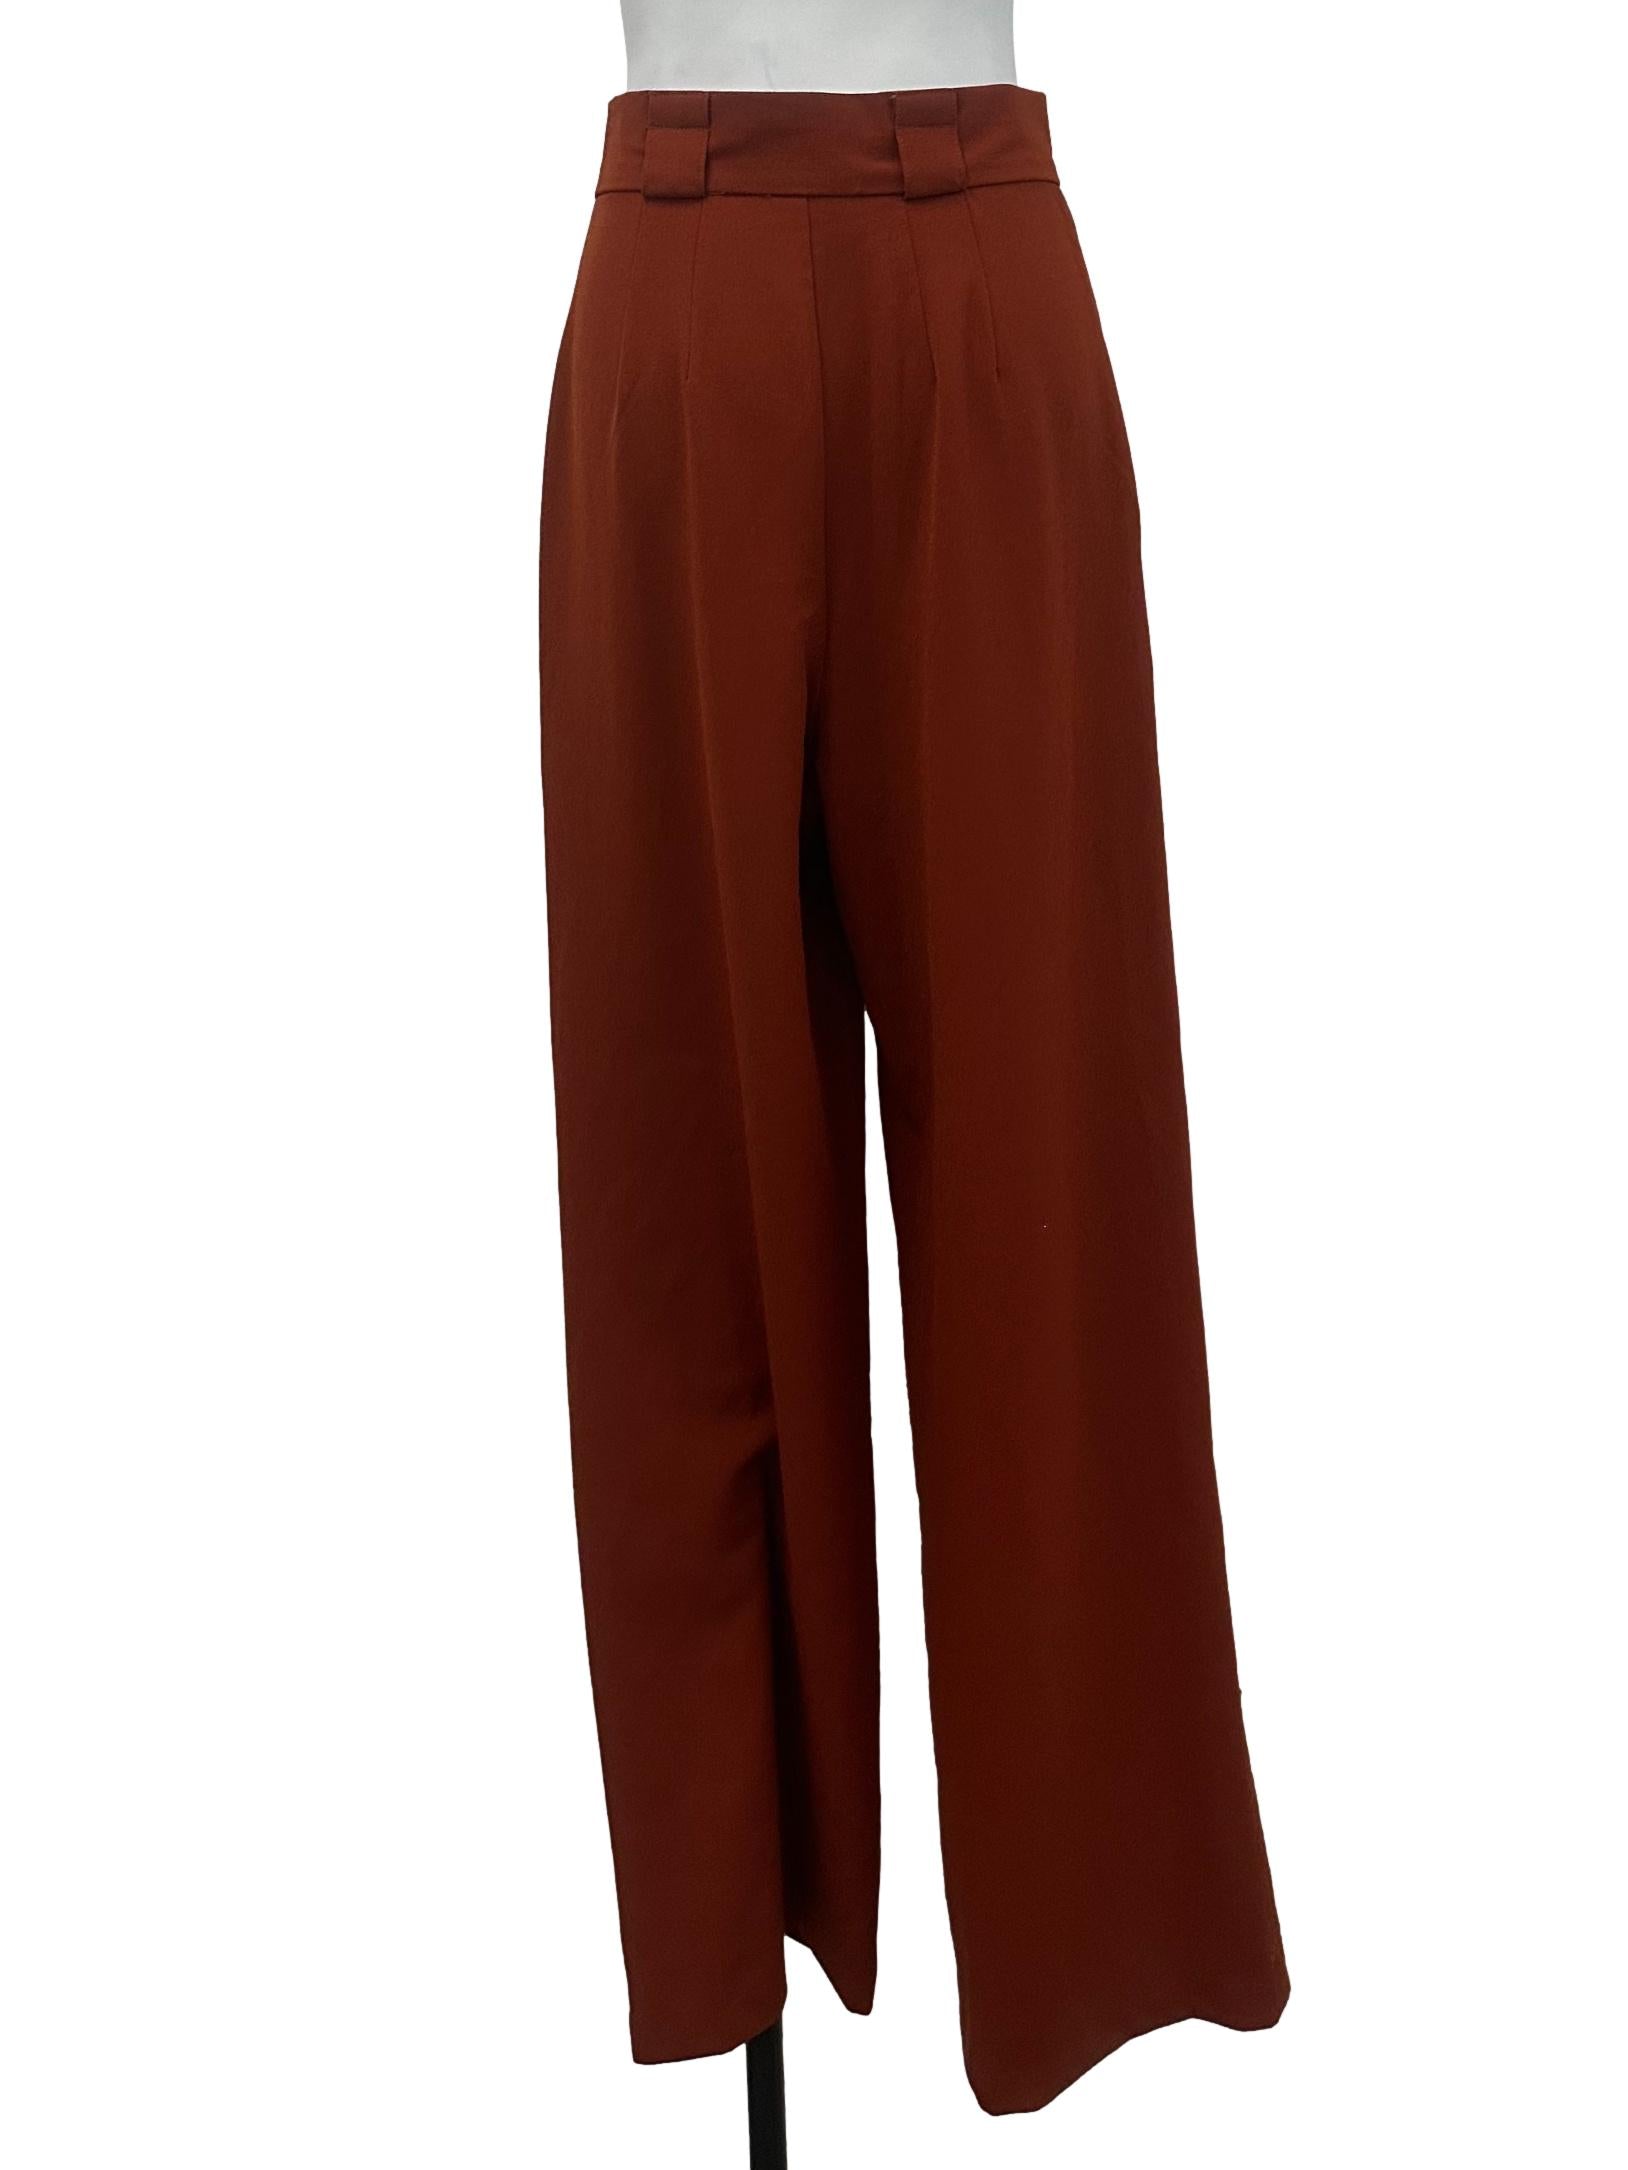 Brownish Red Formal Pants LB